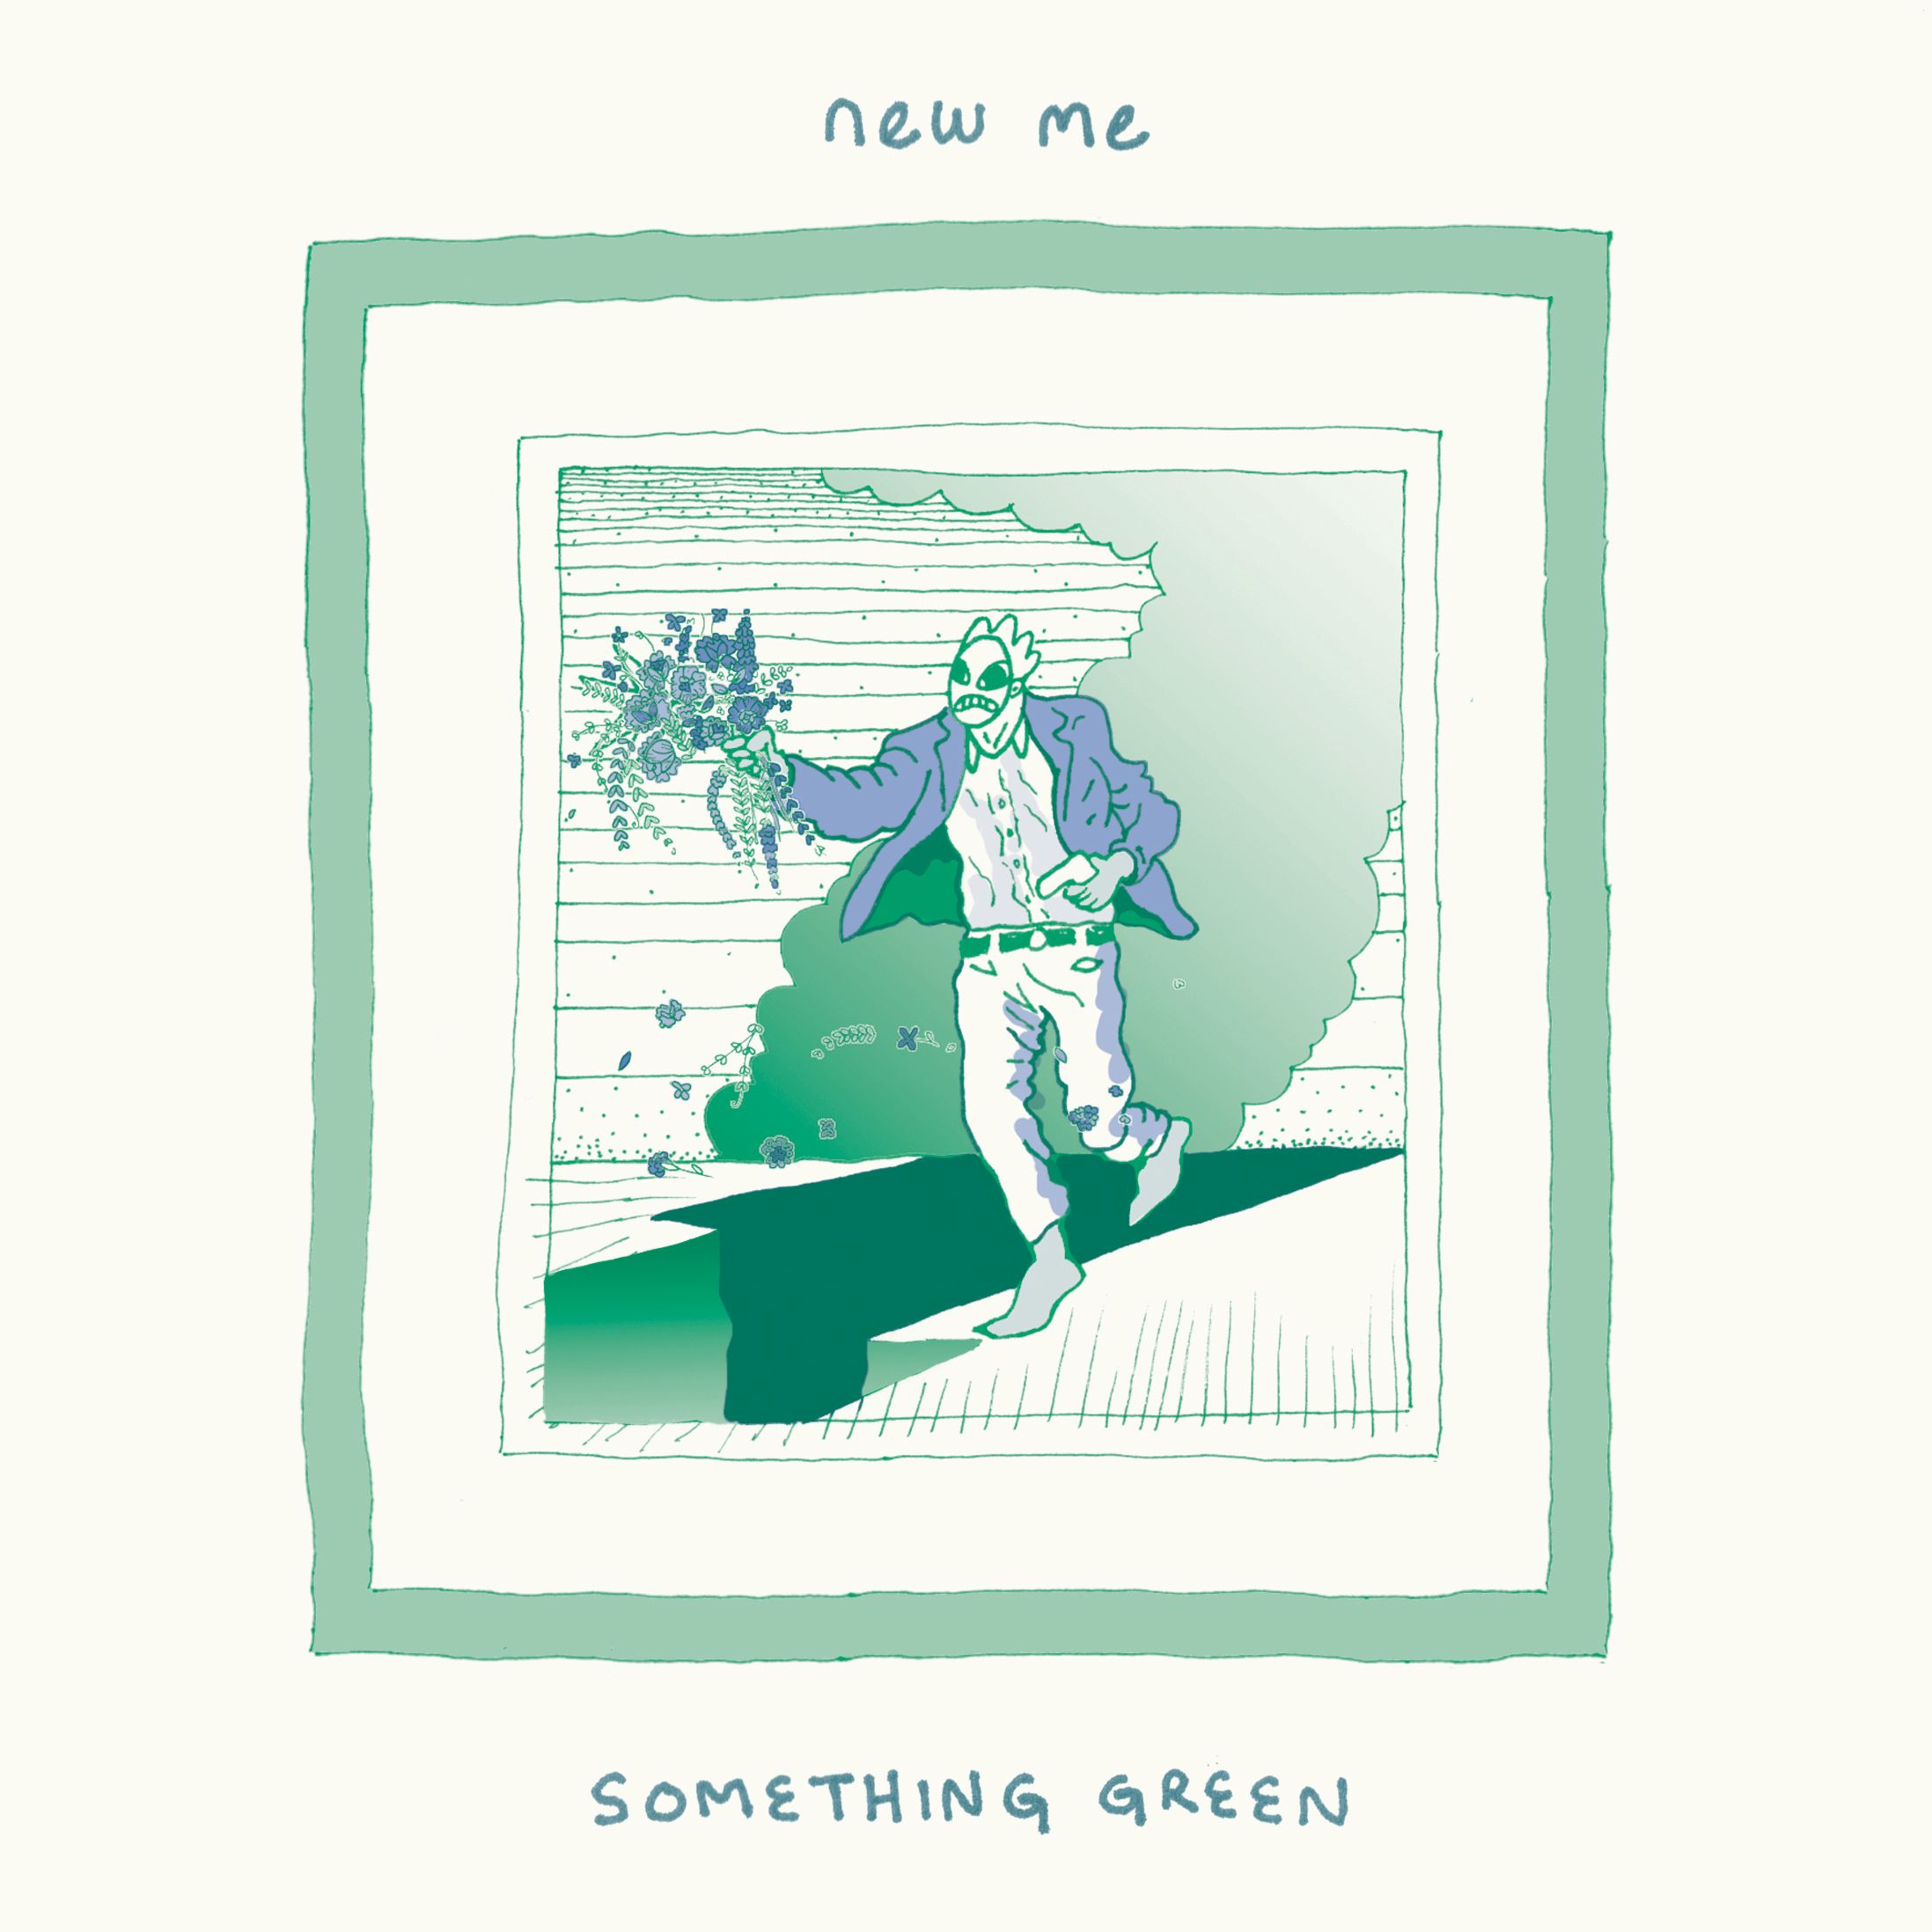 New Me – “Something Green”